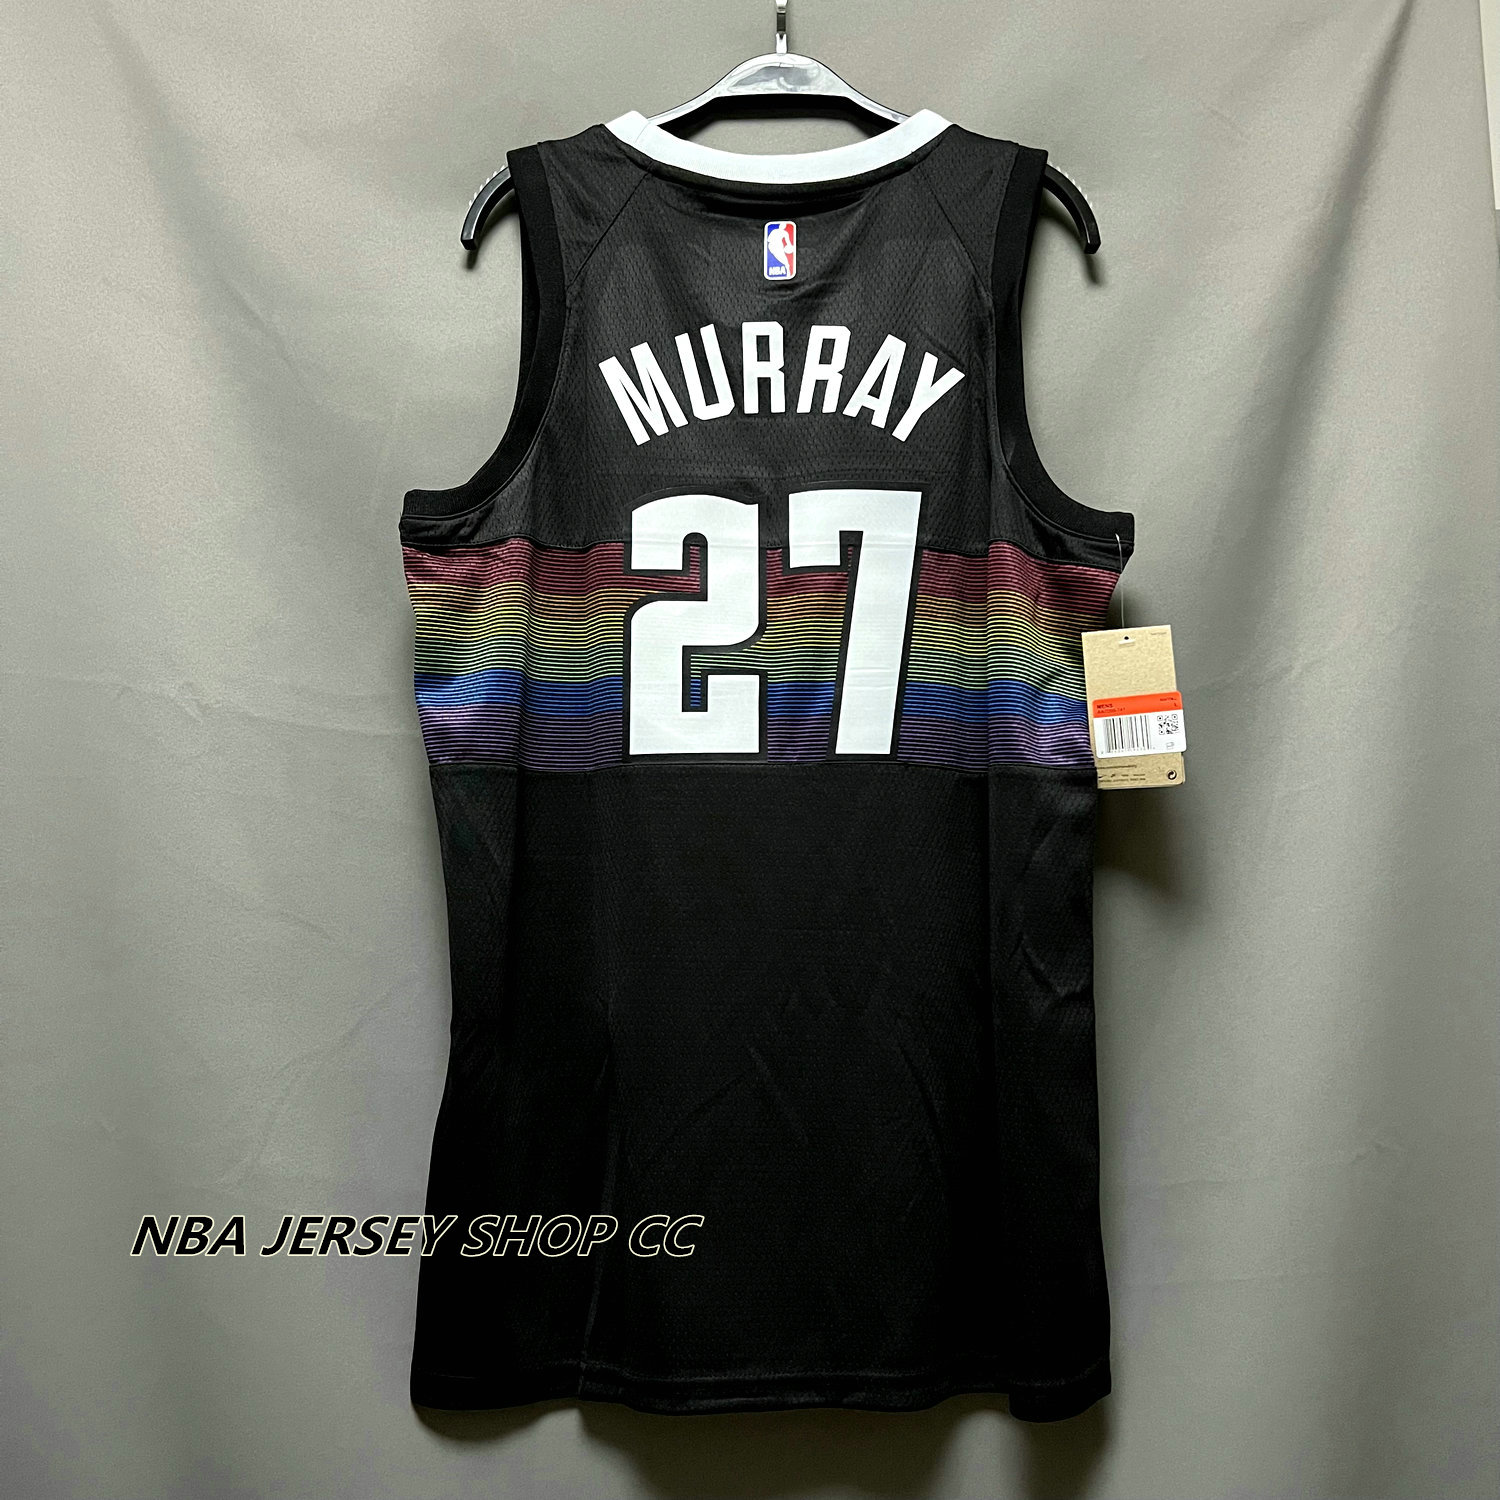 Jamal Murray Denver Nuggets 2019-20 City Edition Jersey